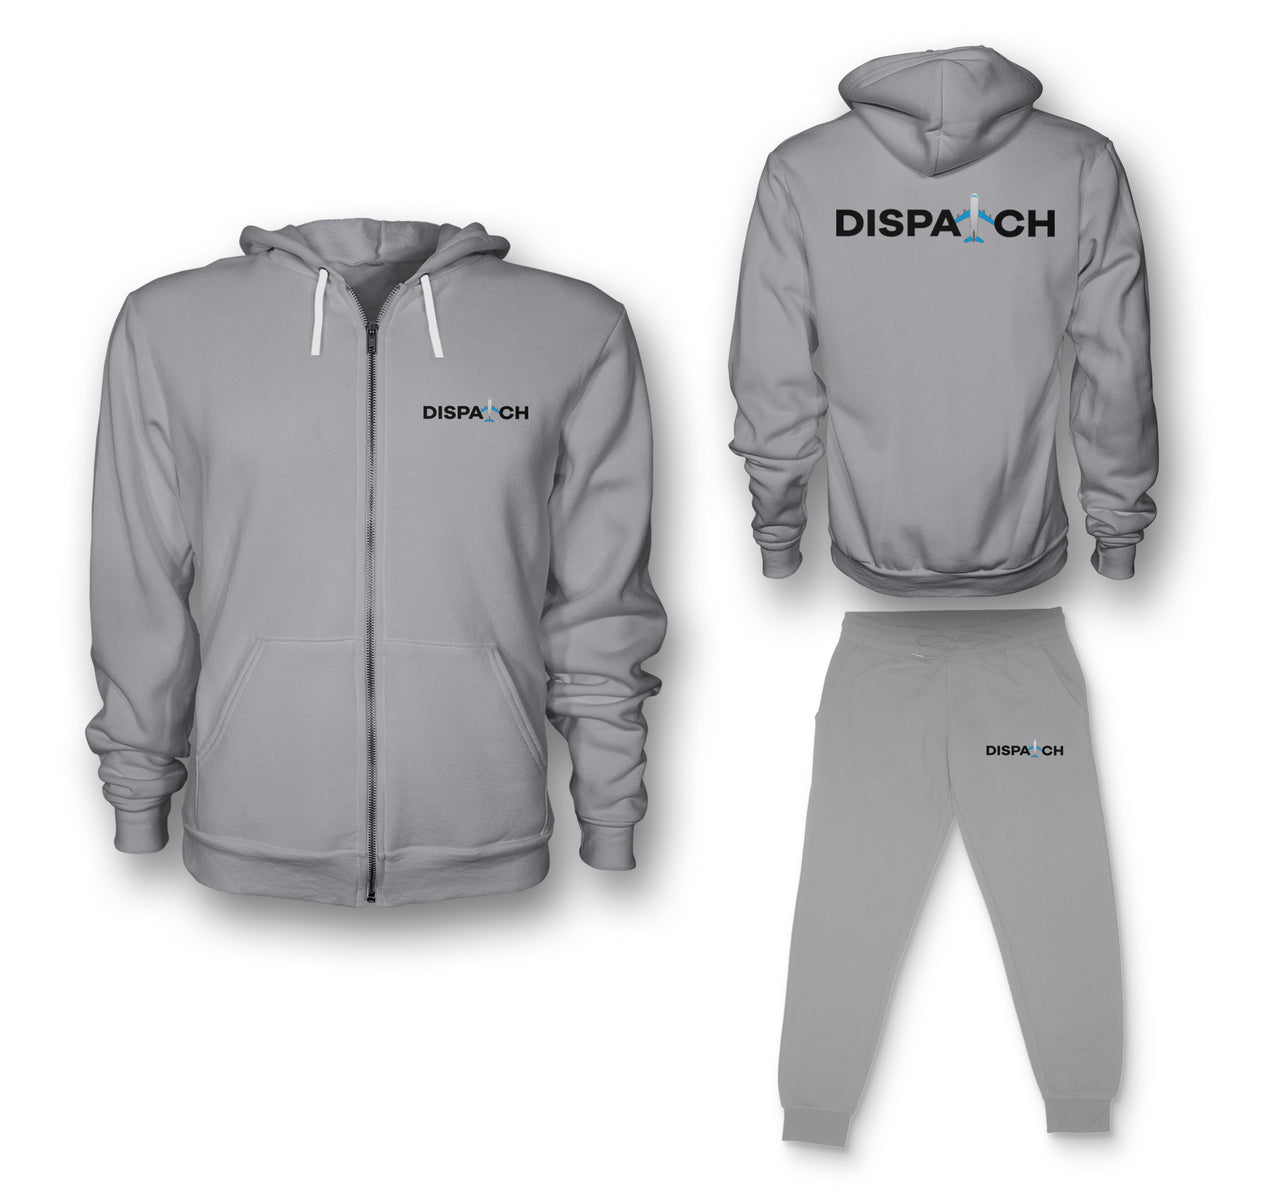 Dispatch Designed Zipped Hoodies & Sweatpants Set